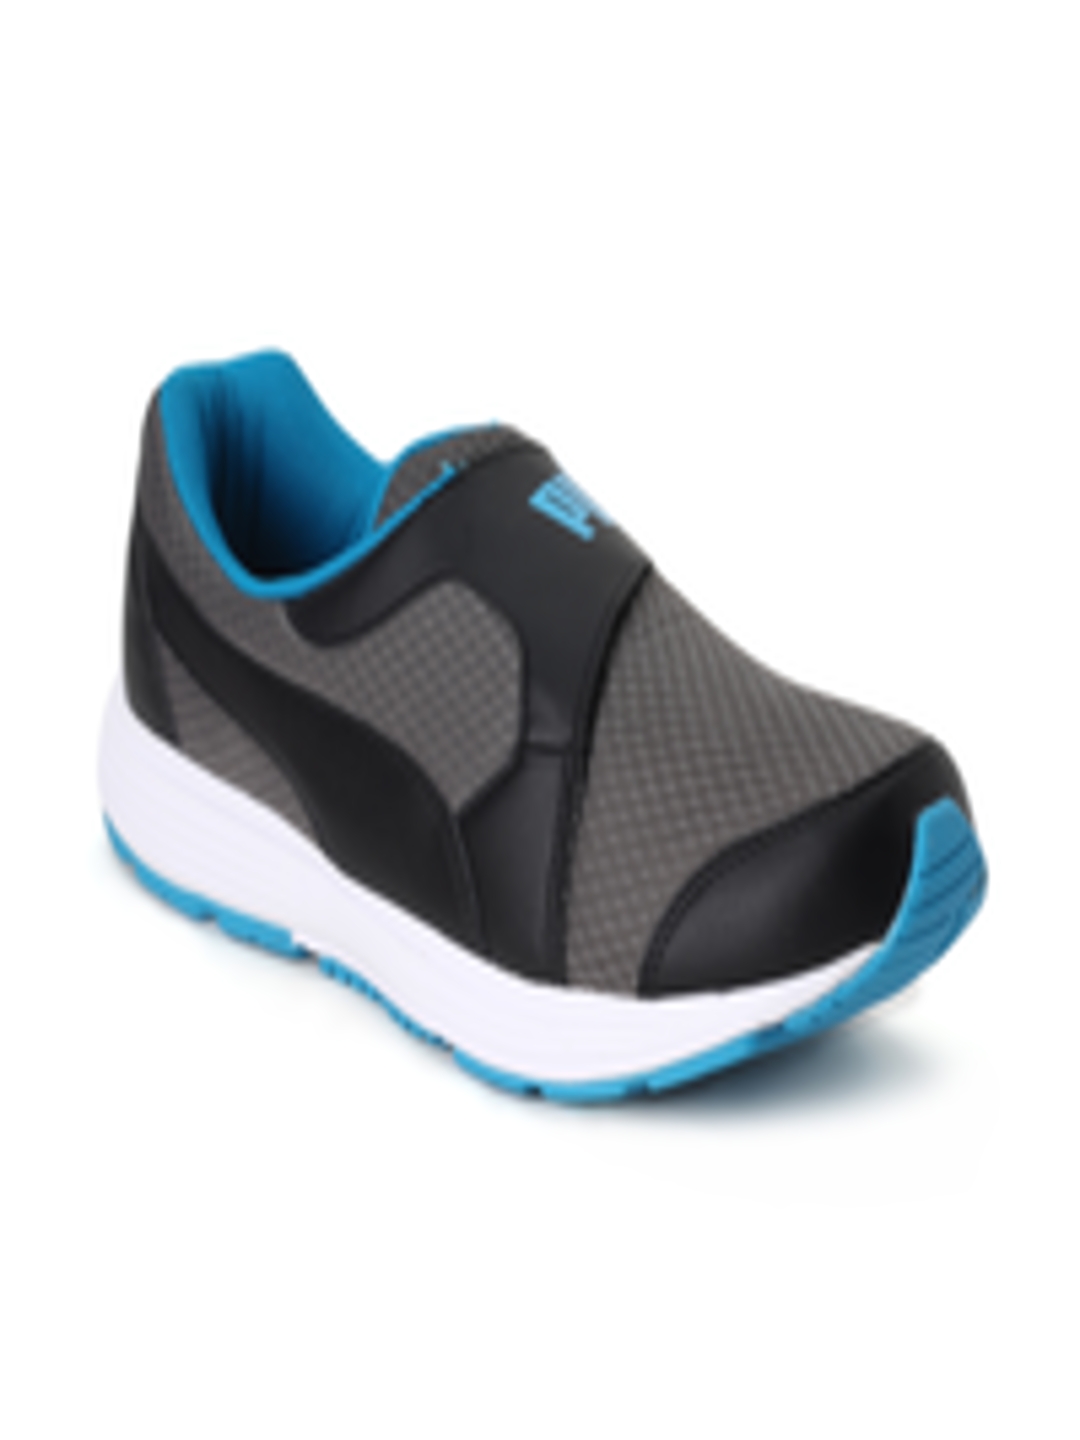 Buy Puma Men Grey Black Reef Slip On Leather Running Shoes - Sports ...